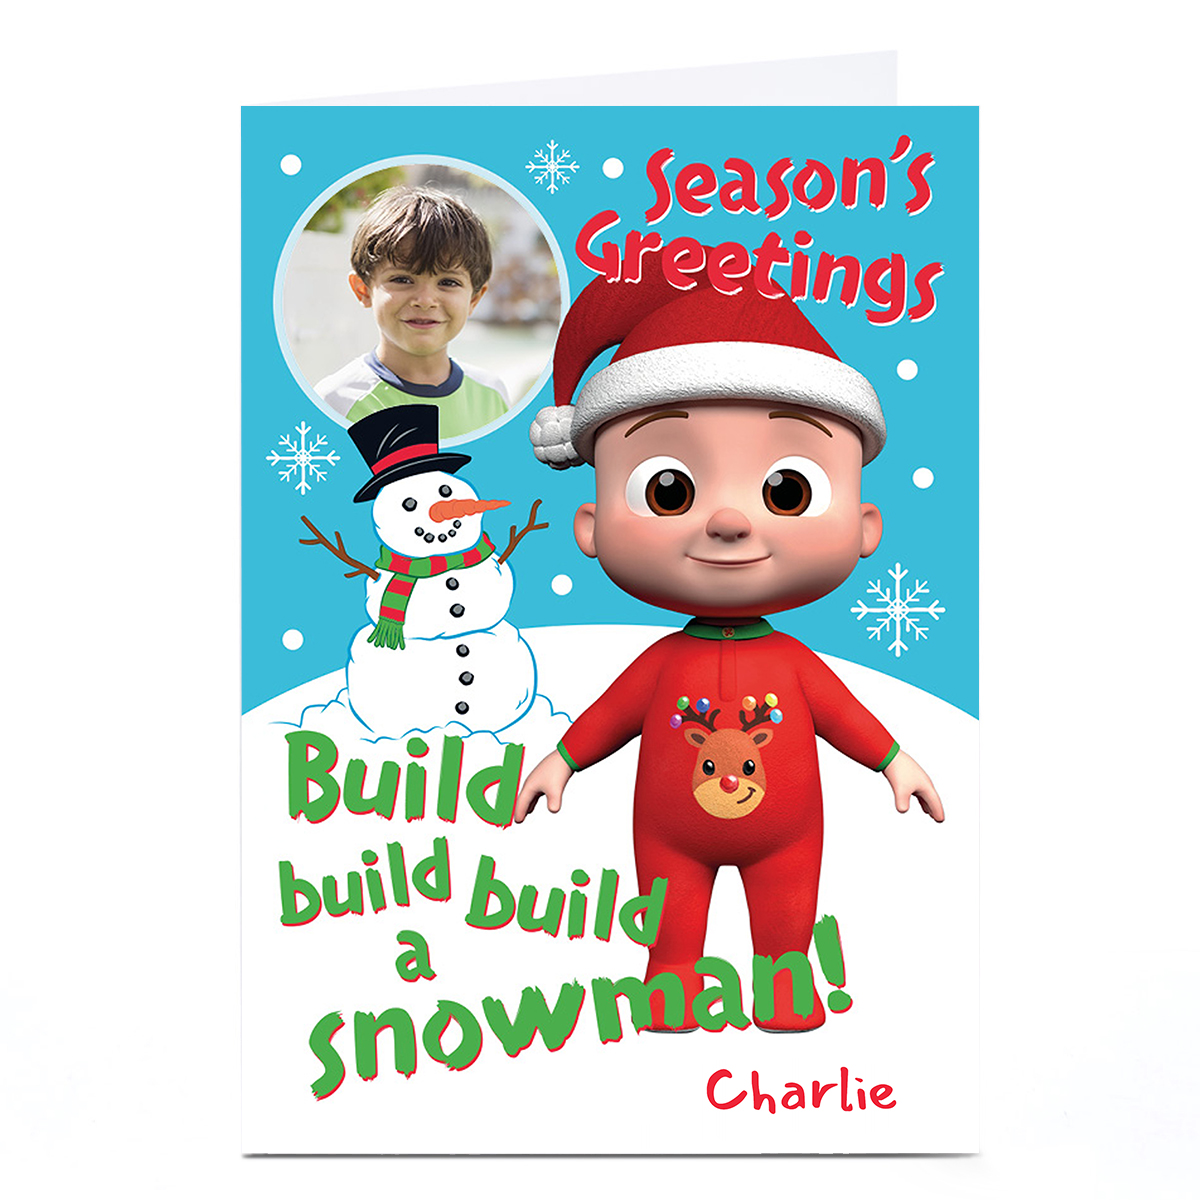 Photo CoComelon Christmas Card - Build Build Build a Snowman!